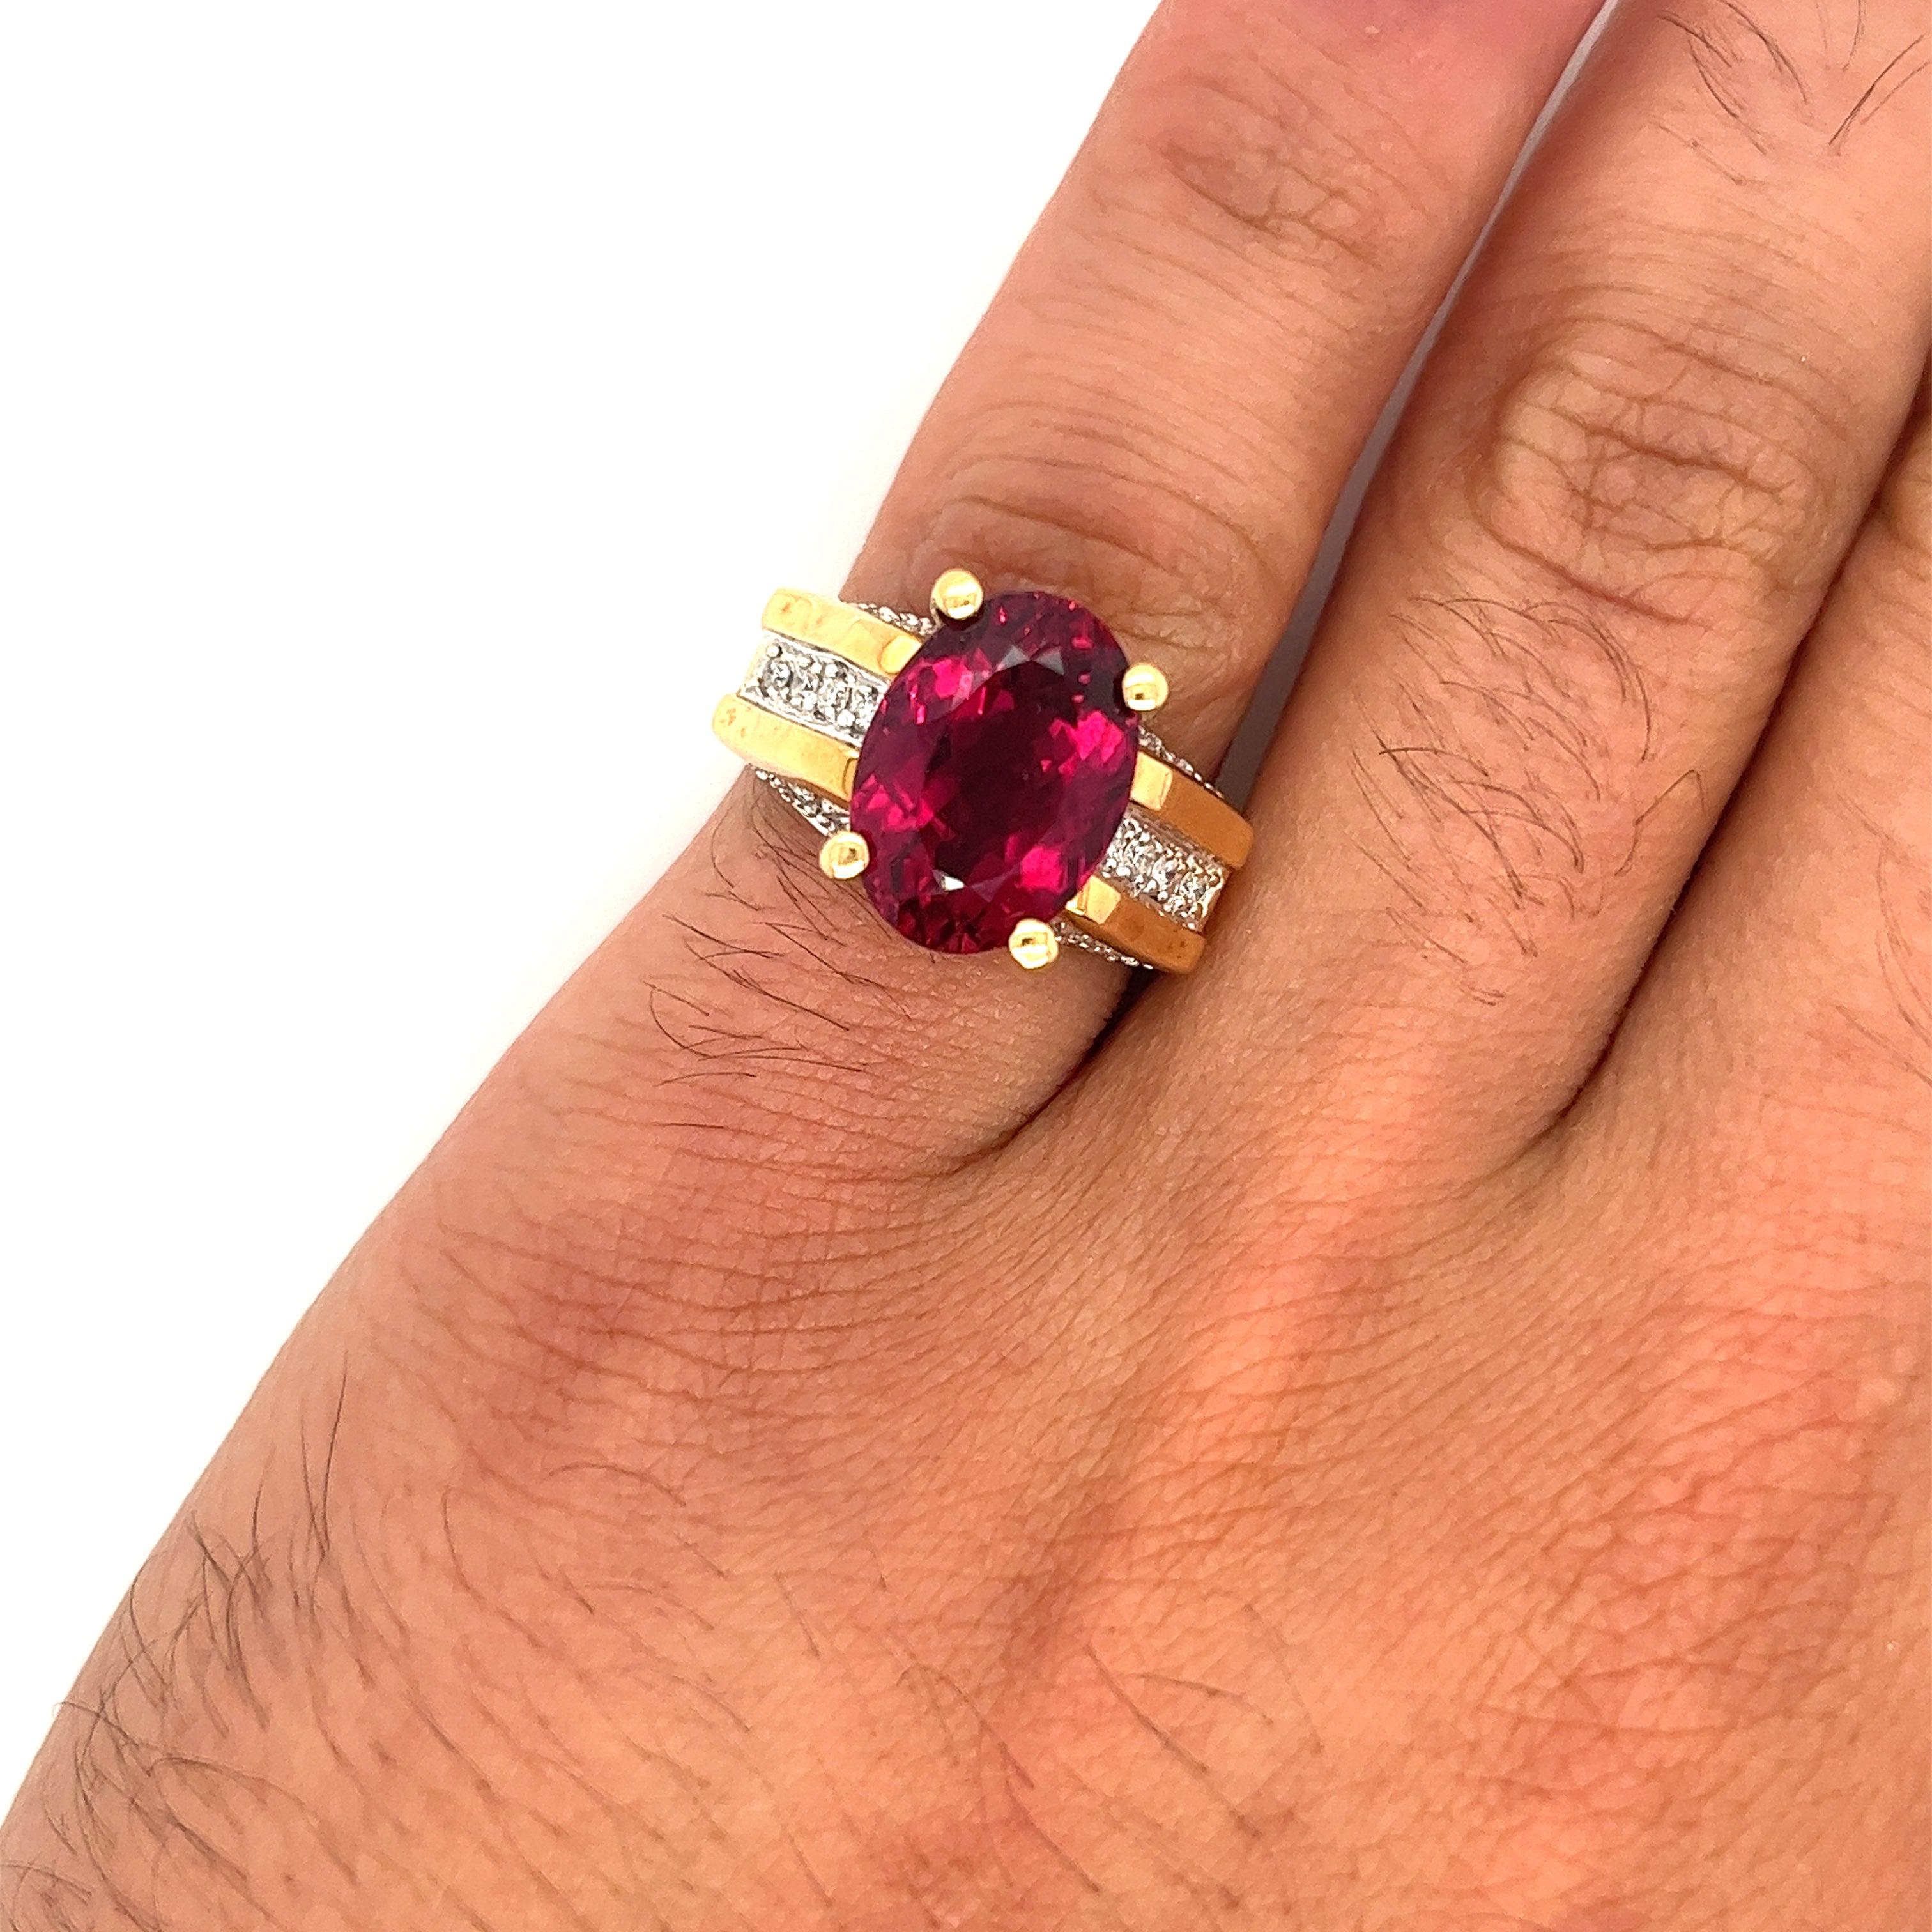 GIA-Certified-Oval-Cut-7-Carat-Purplish-Red-Tourmaline-Ring-with-Diamond-Sides-in-18K-Gold-Semi-Precious-Jewelry-2.jpg